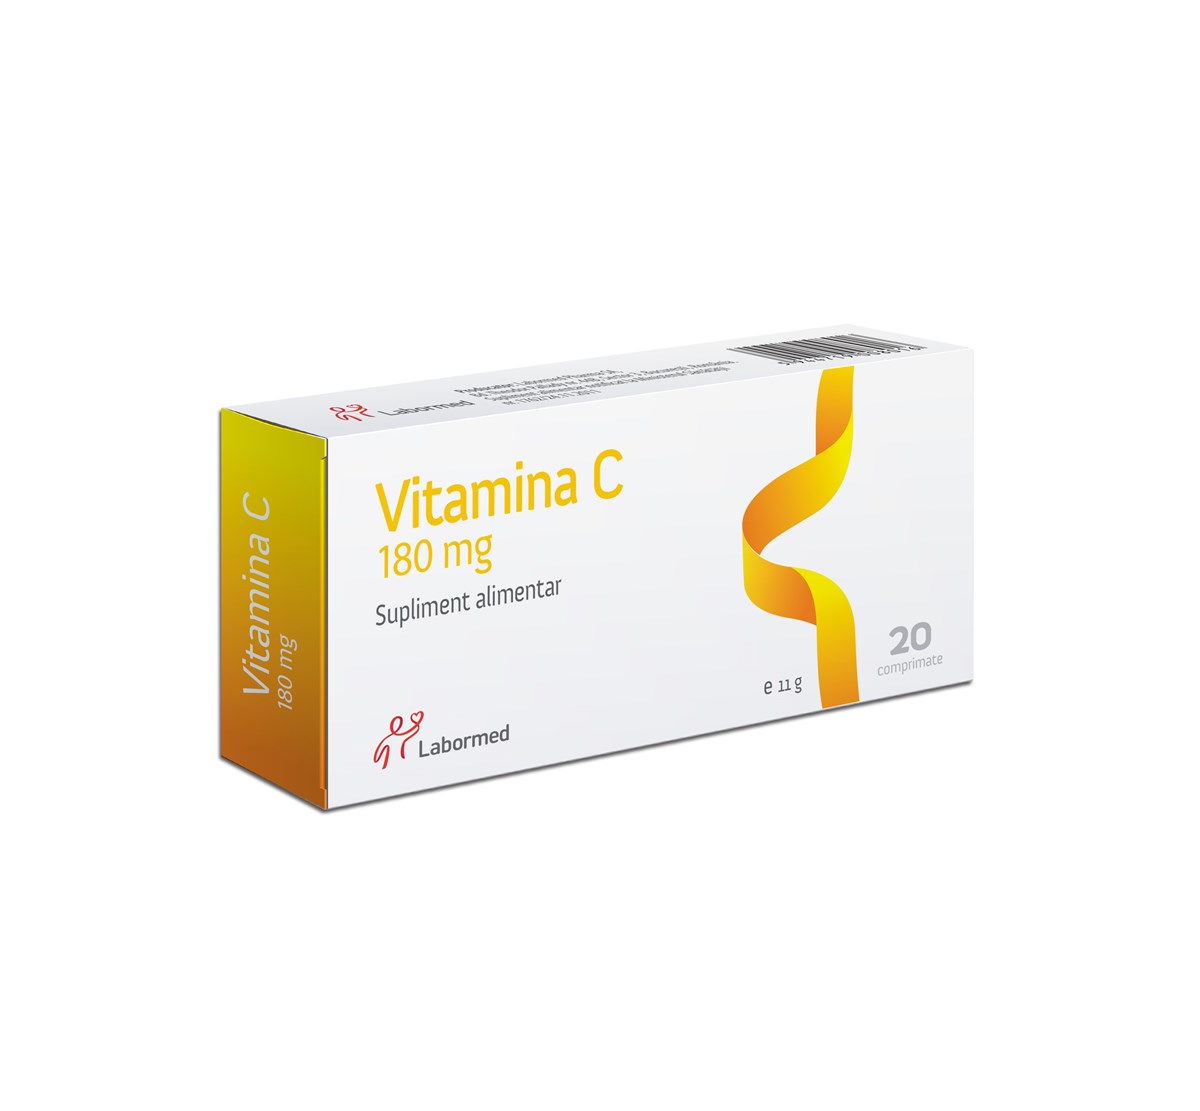 Imunitate - Vitamina C 180mg, 20 comprimate, Labormed, sinapis.ro